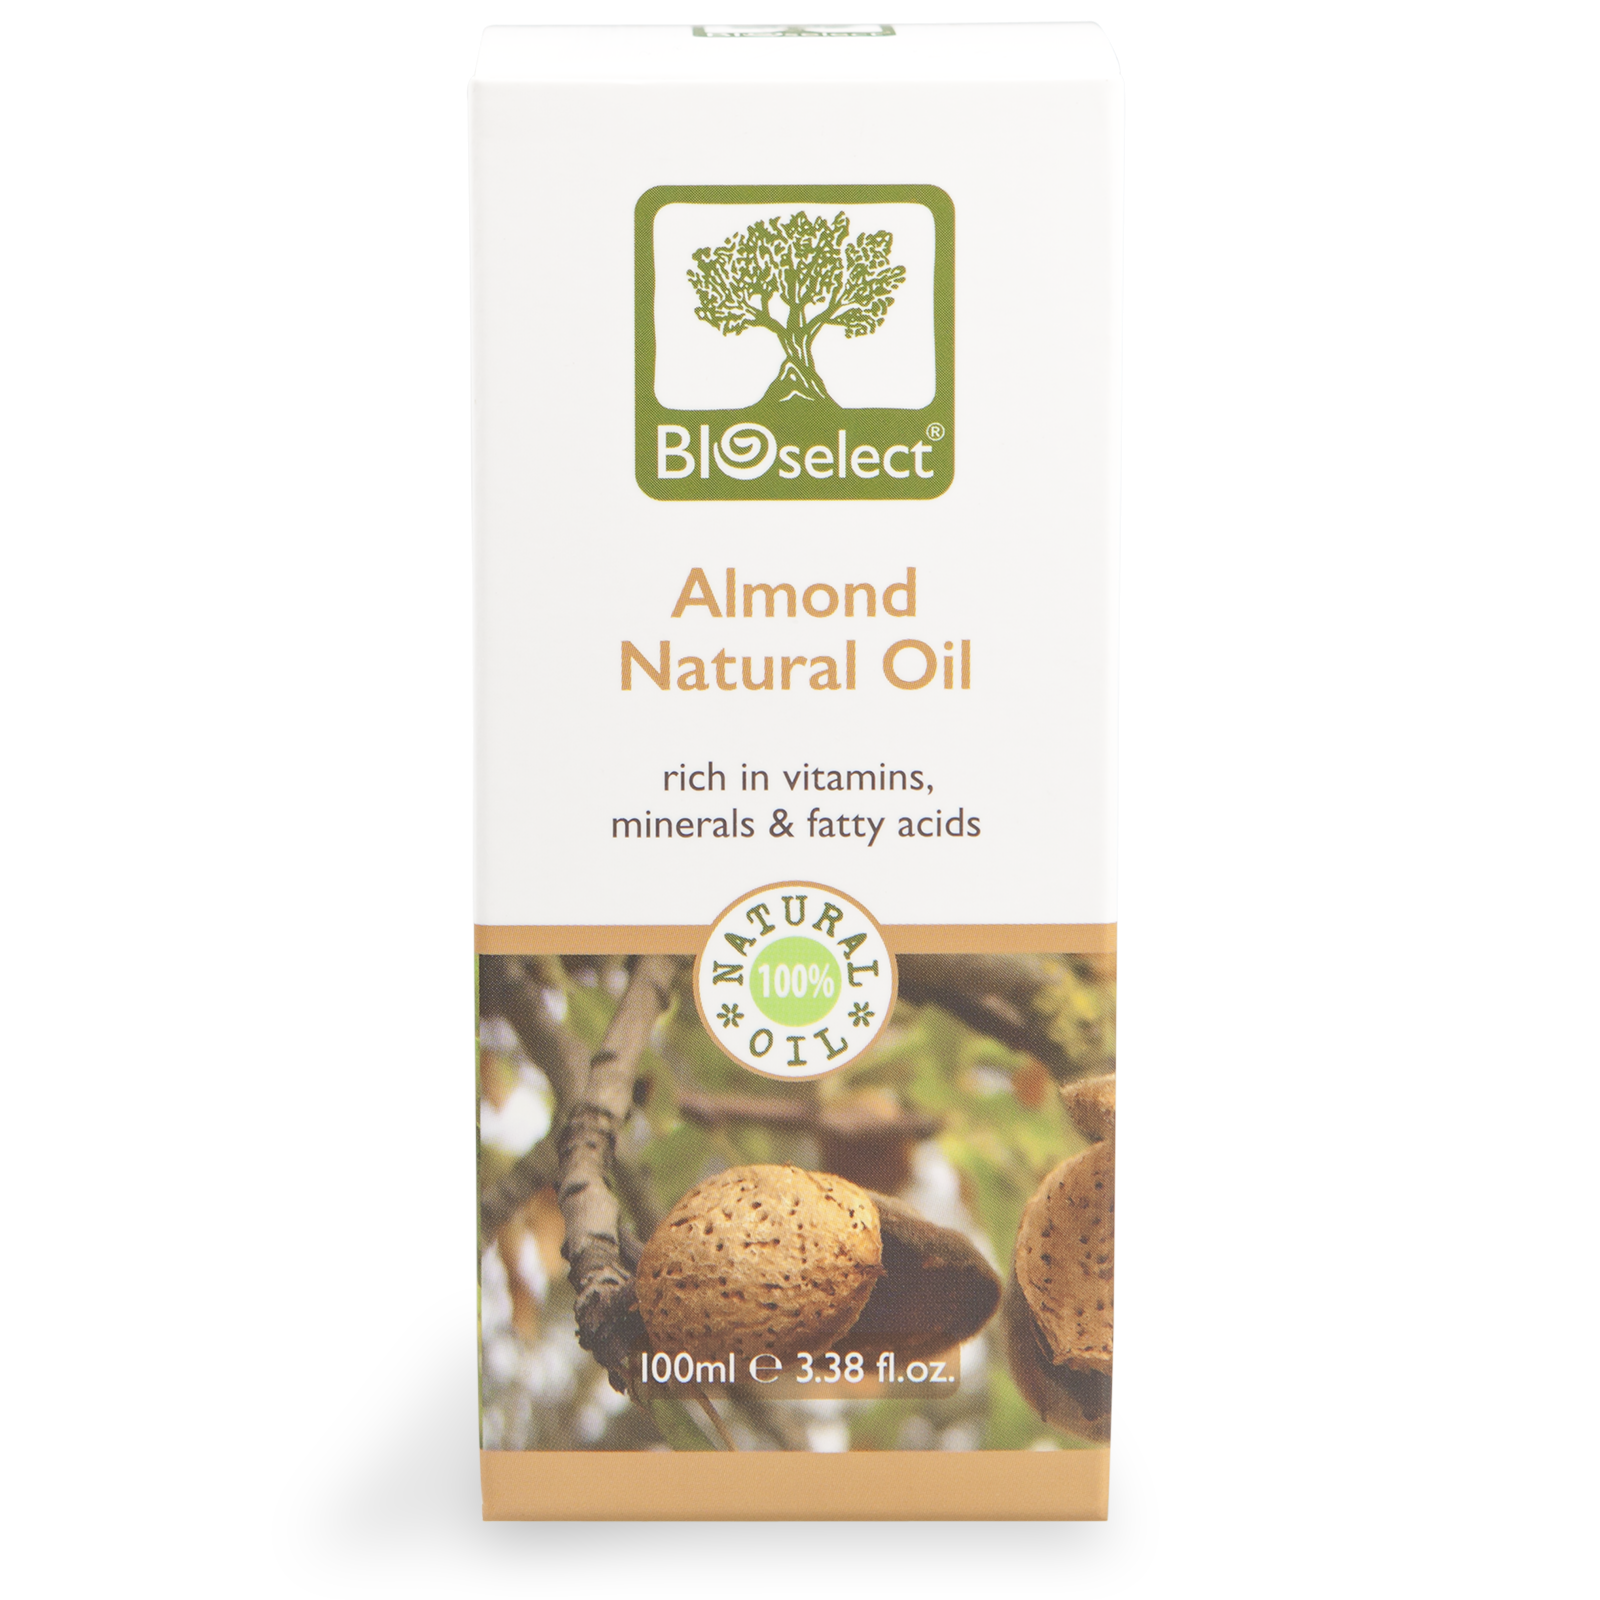 Bioselect Almond Natural Oil